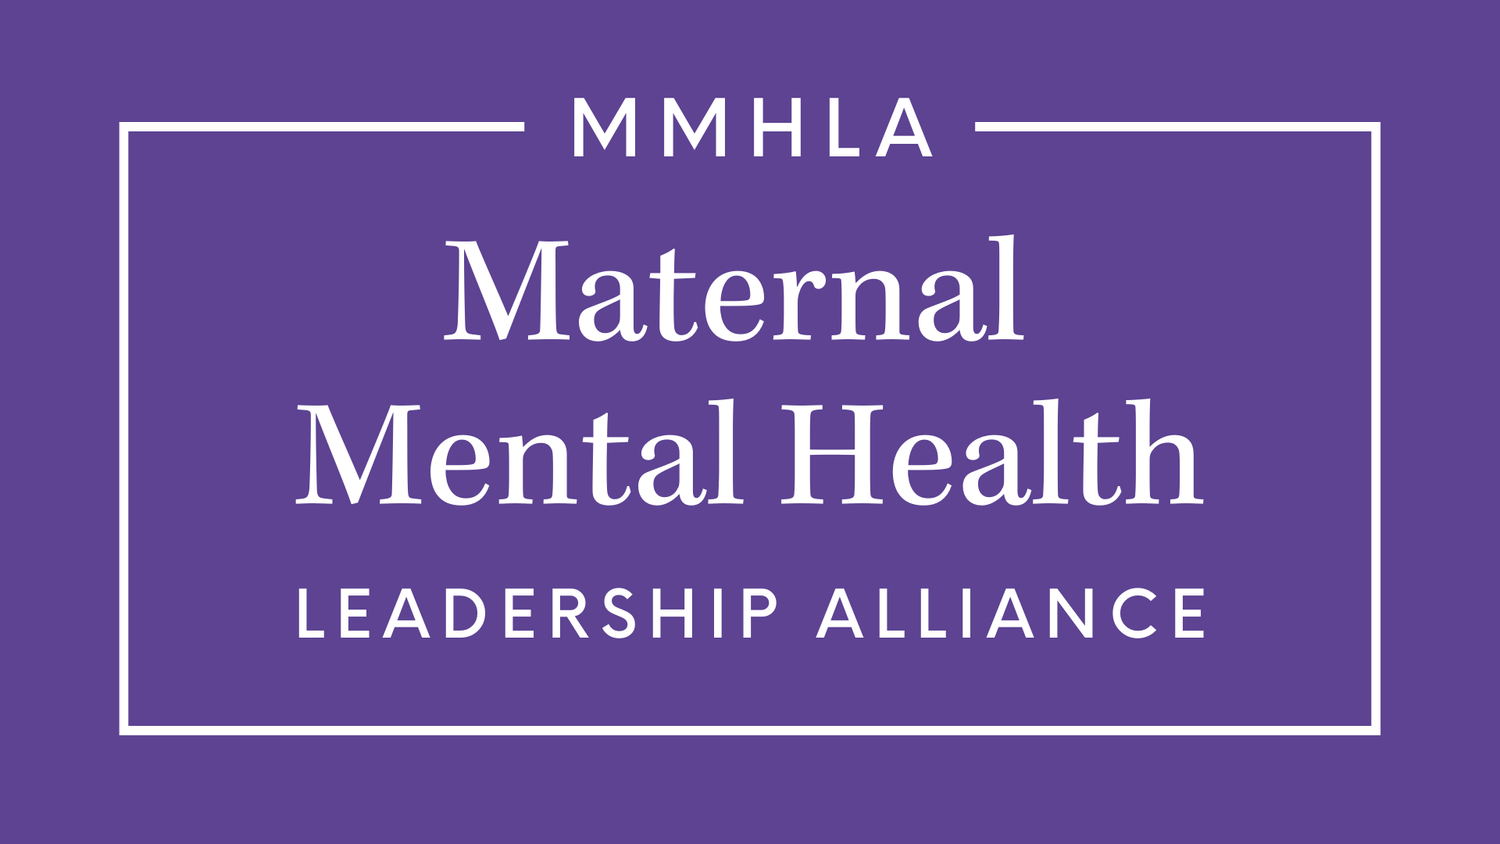 Maternal Mental Health Leadership Alliance: MMHLA